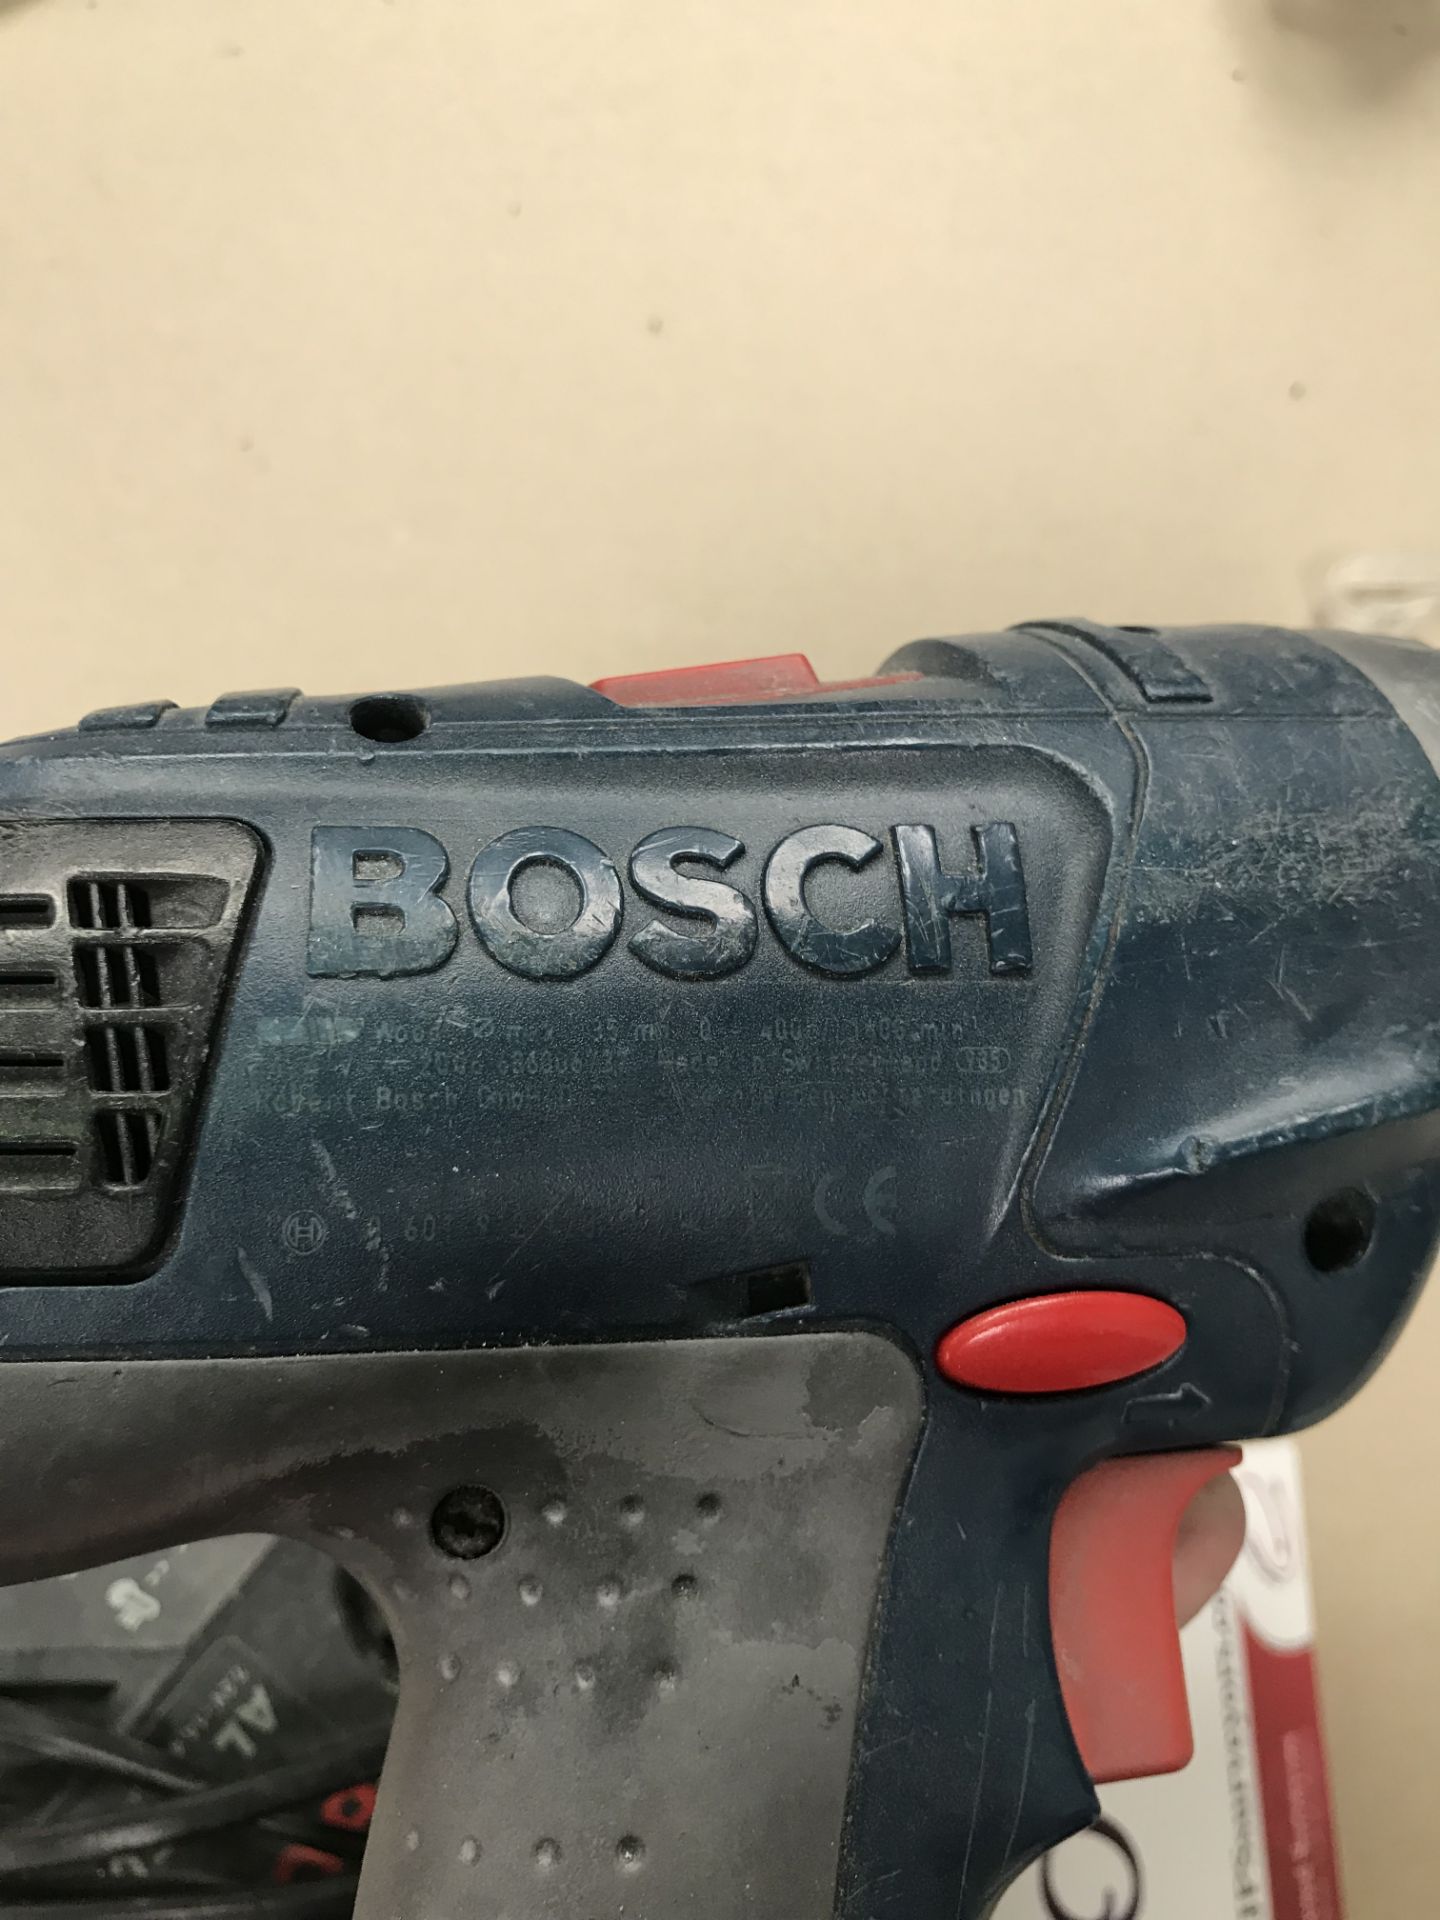 Bosch Power Drill w/ Charging Station - No sticker for model - Bild 4 aus 4